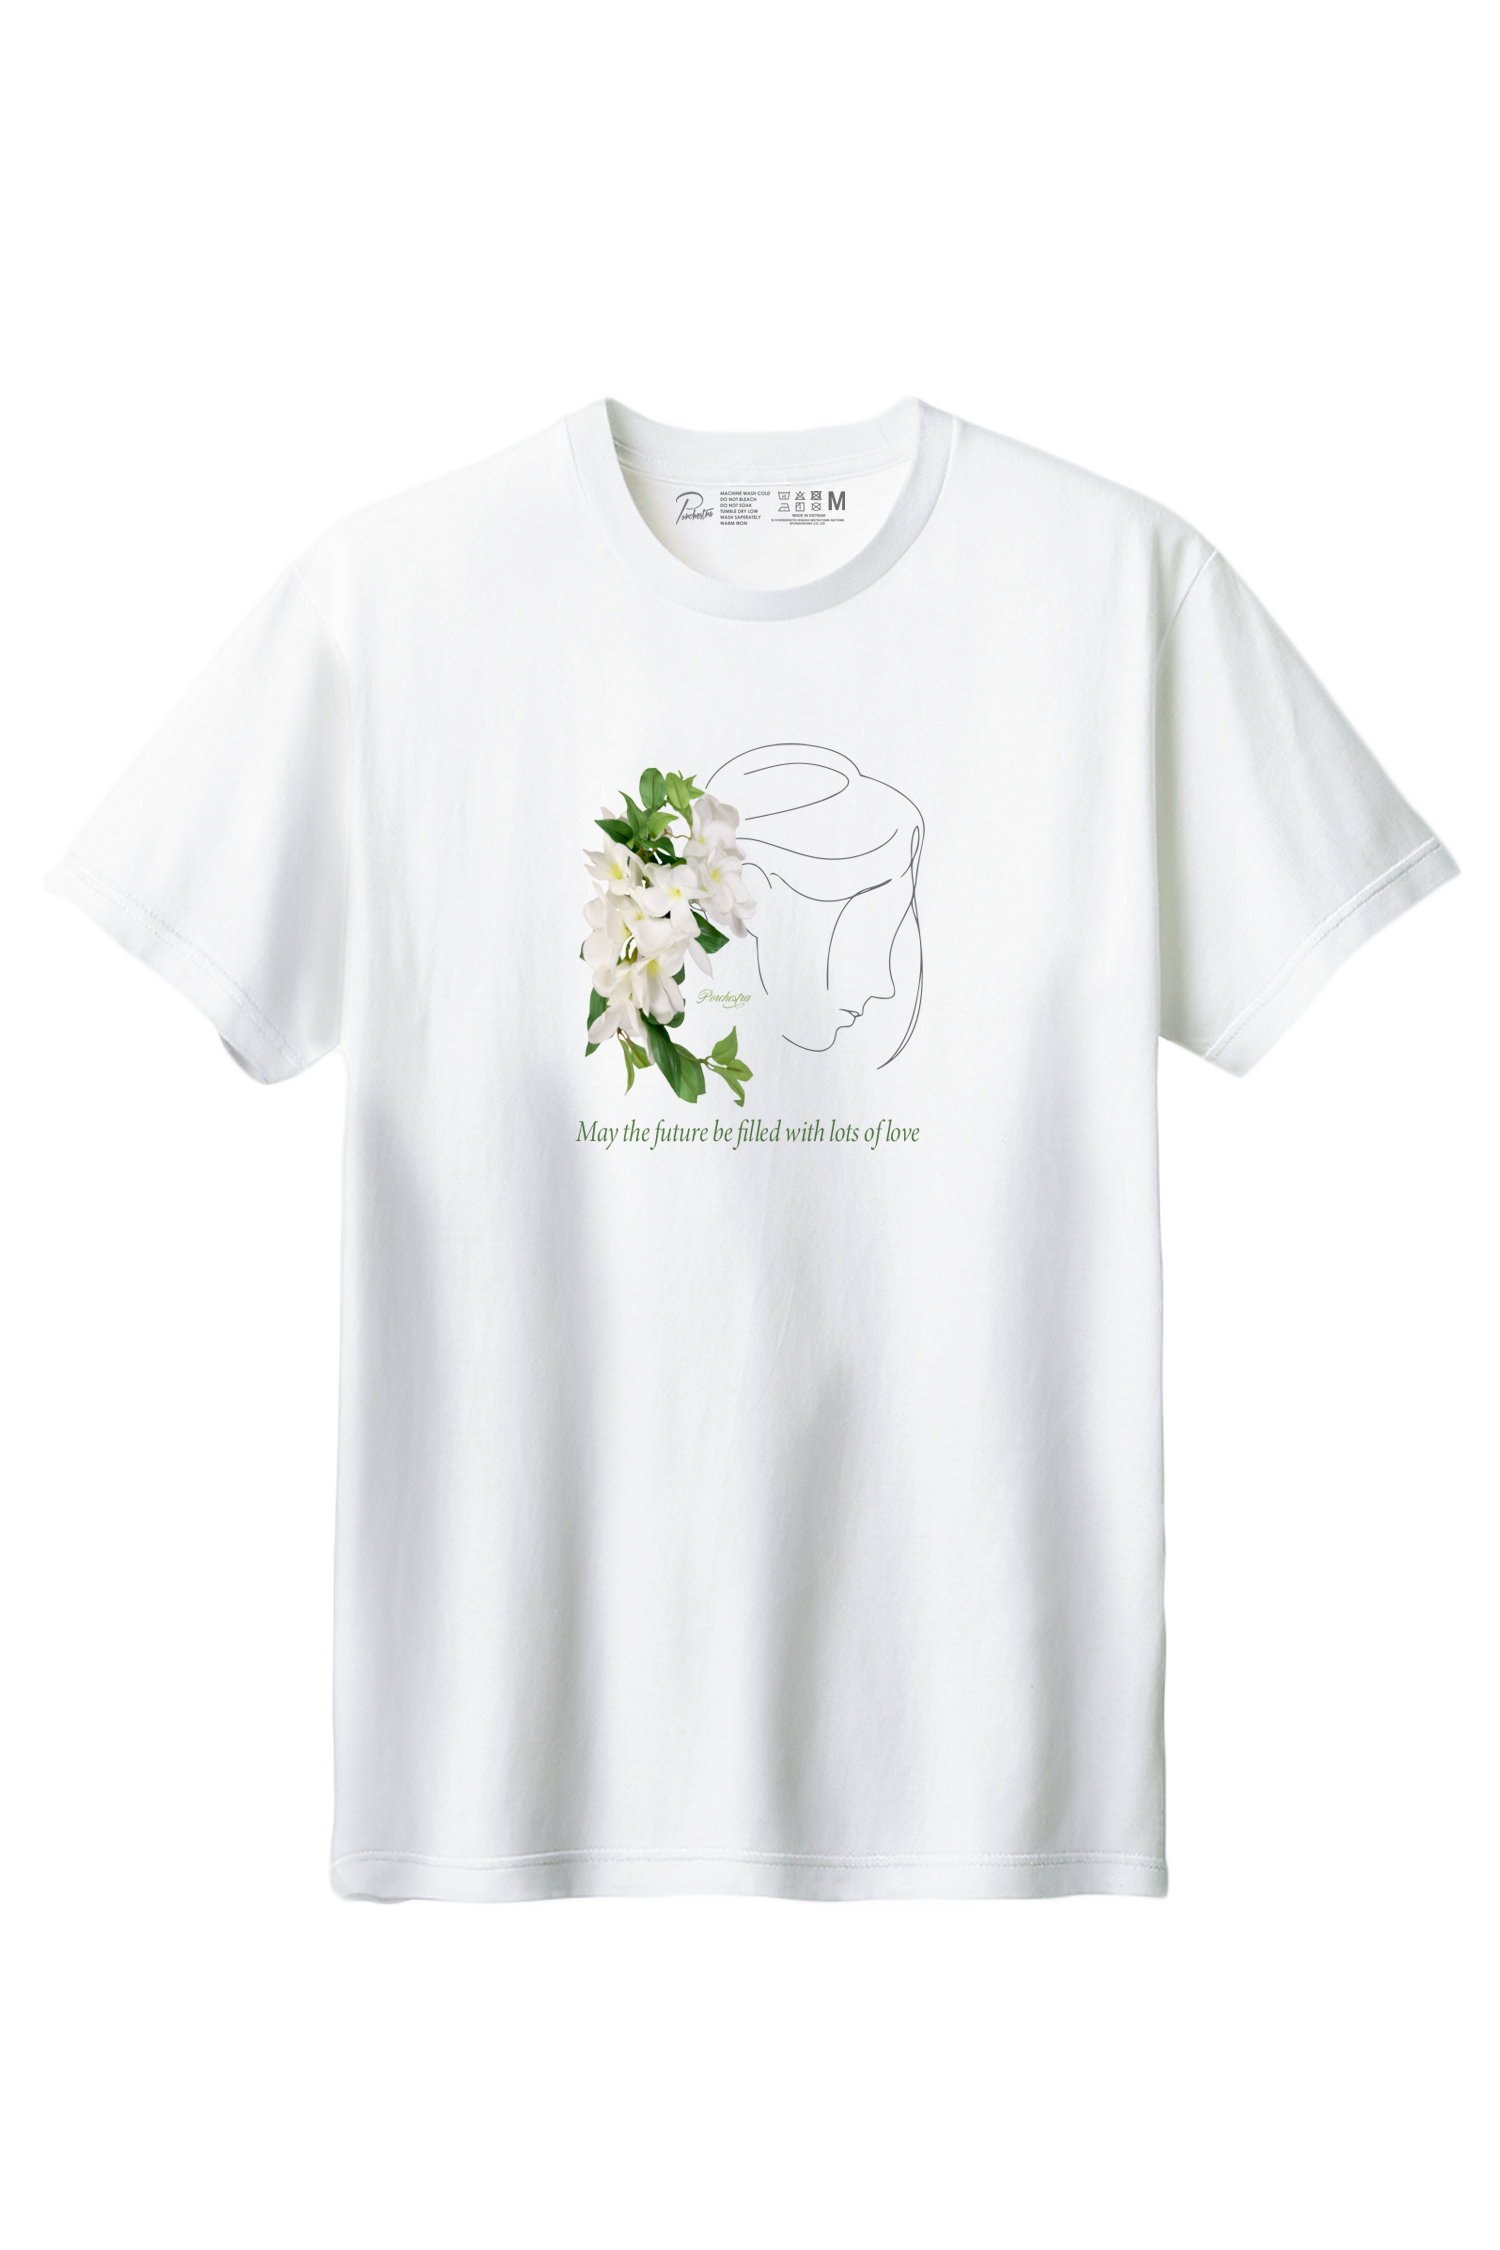 【PORCHESTRA】花嫁衣装のような大人の女性Tシャツ!/プルメリアと一筆書きの女性Tシャツ -Plumeria and ONE LINE Woman Tee/cotton 100%/size:XS-XXL XL